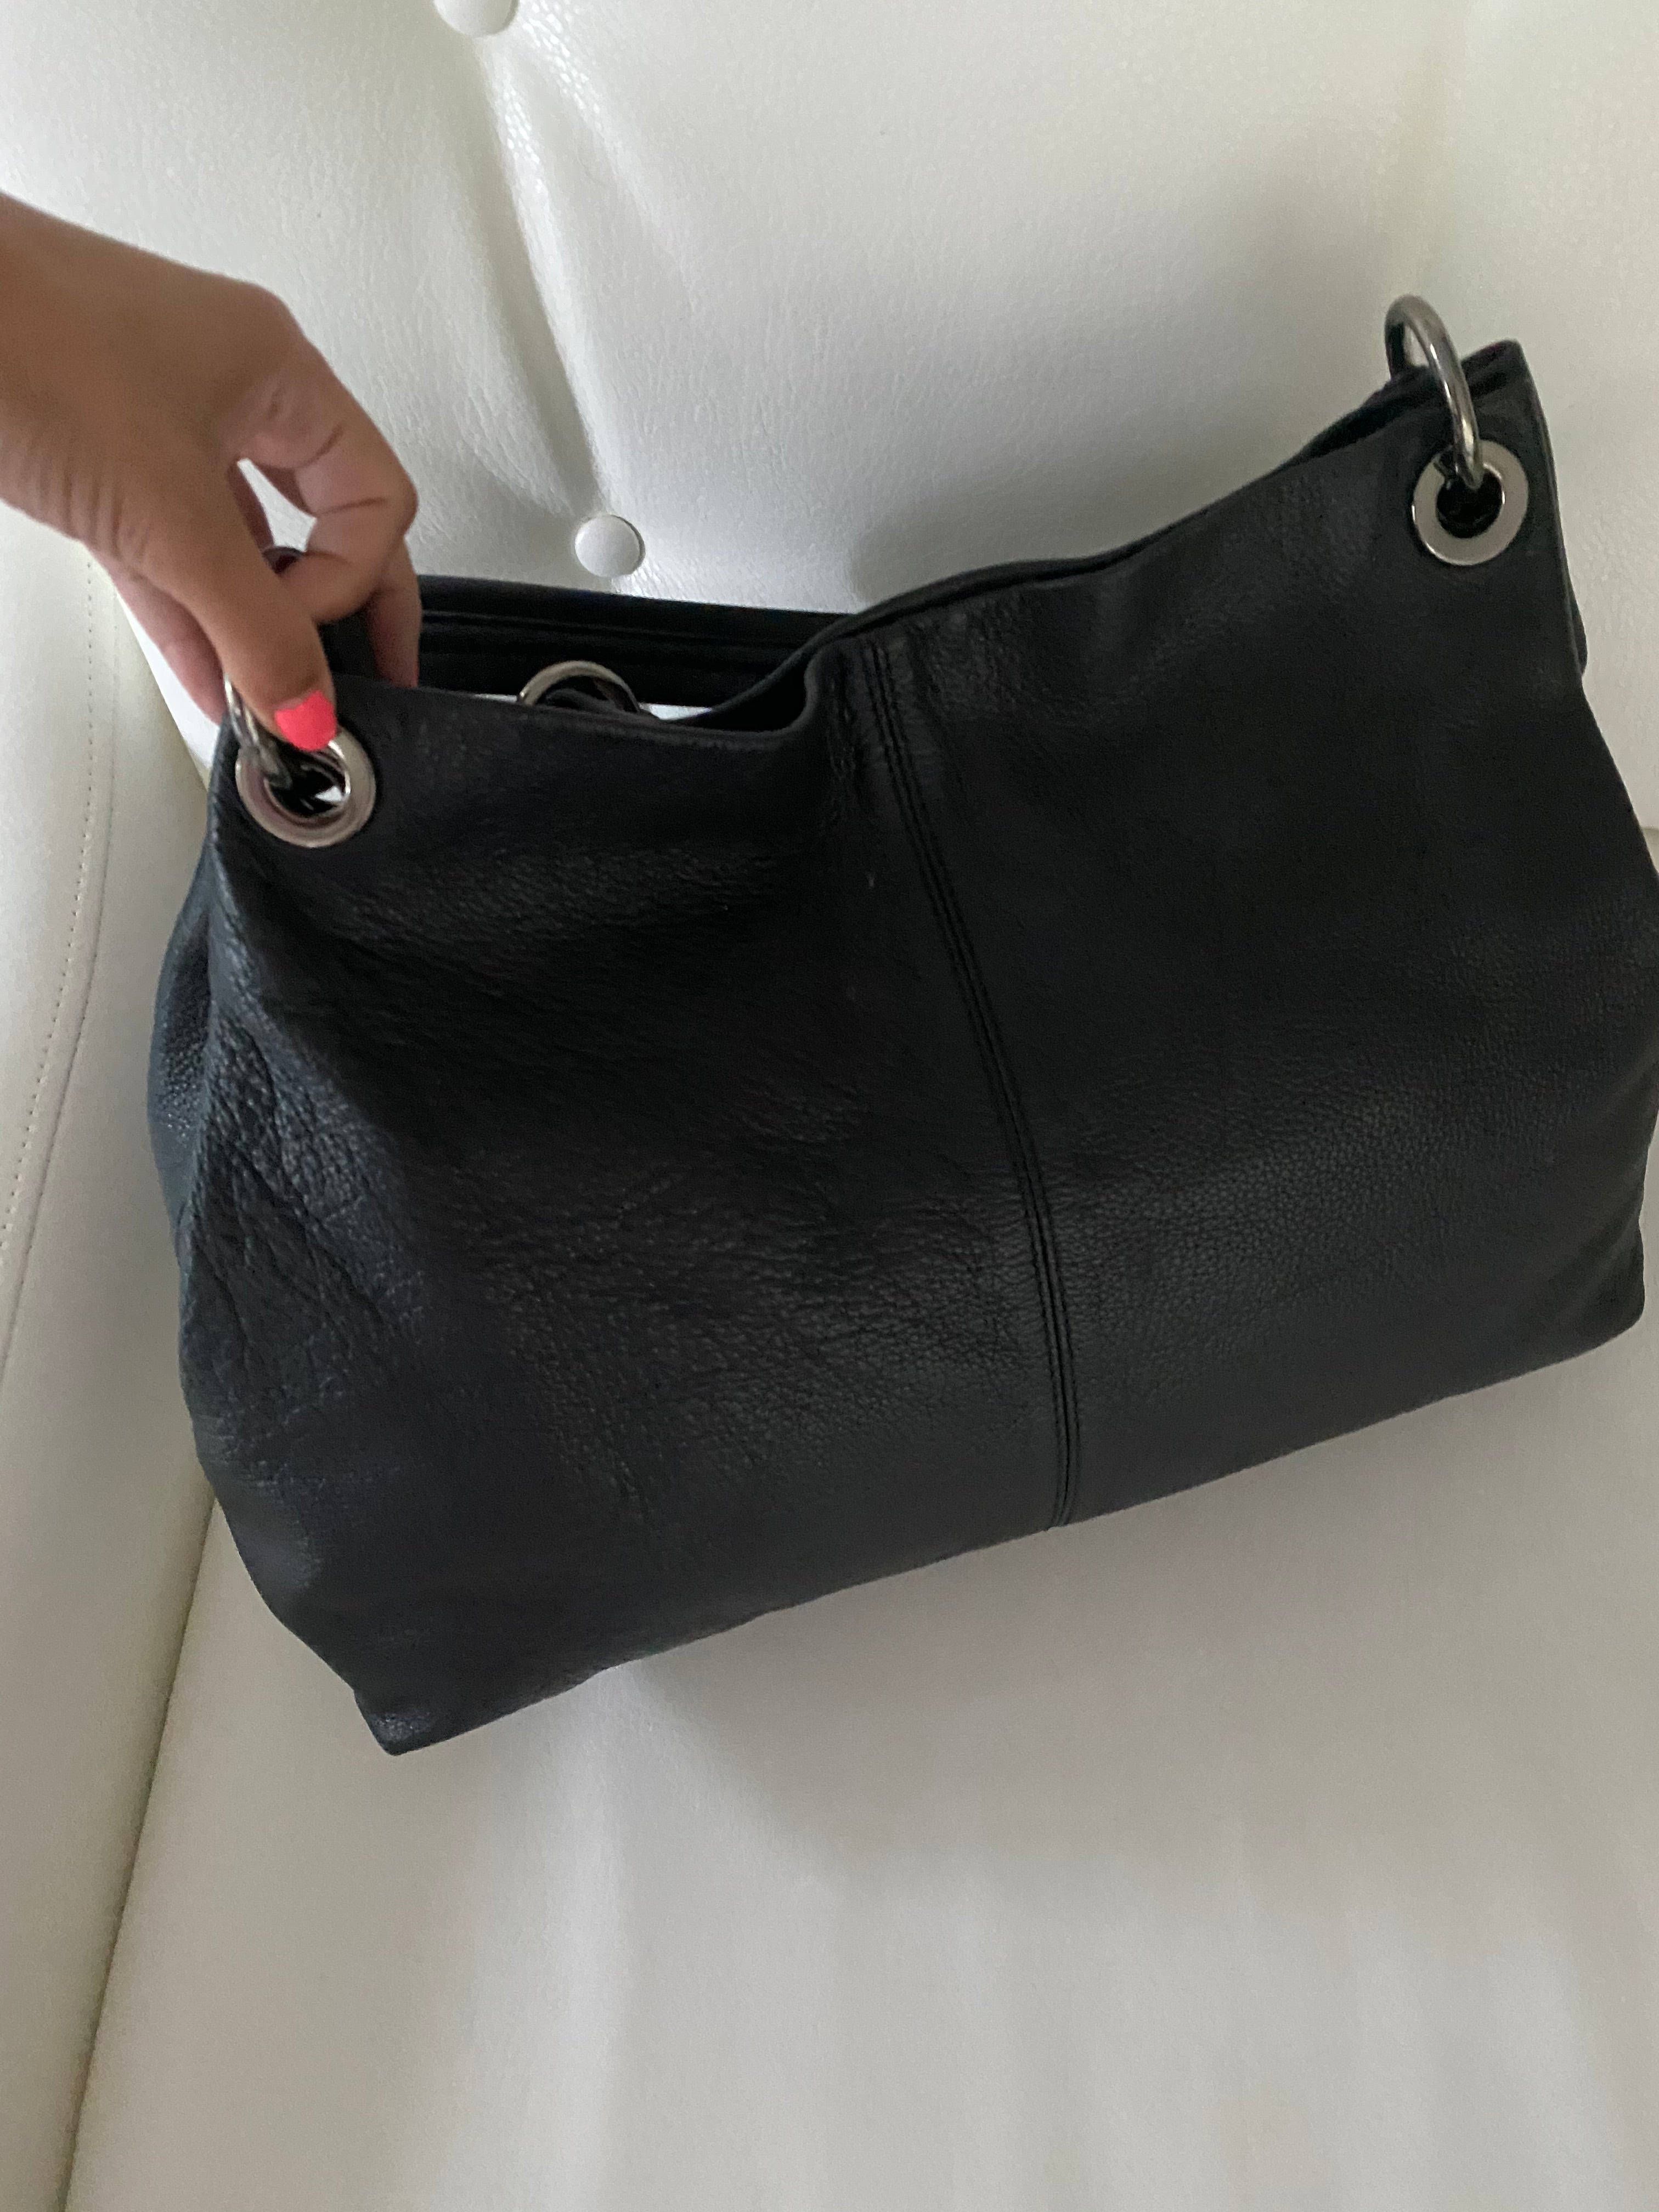 Simply Vera Vera Wang Handbag Leather Black 3 Zipper Compartments Chain On  Strap